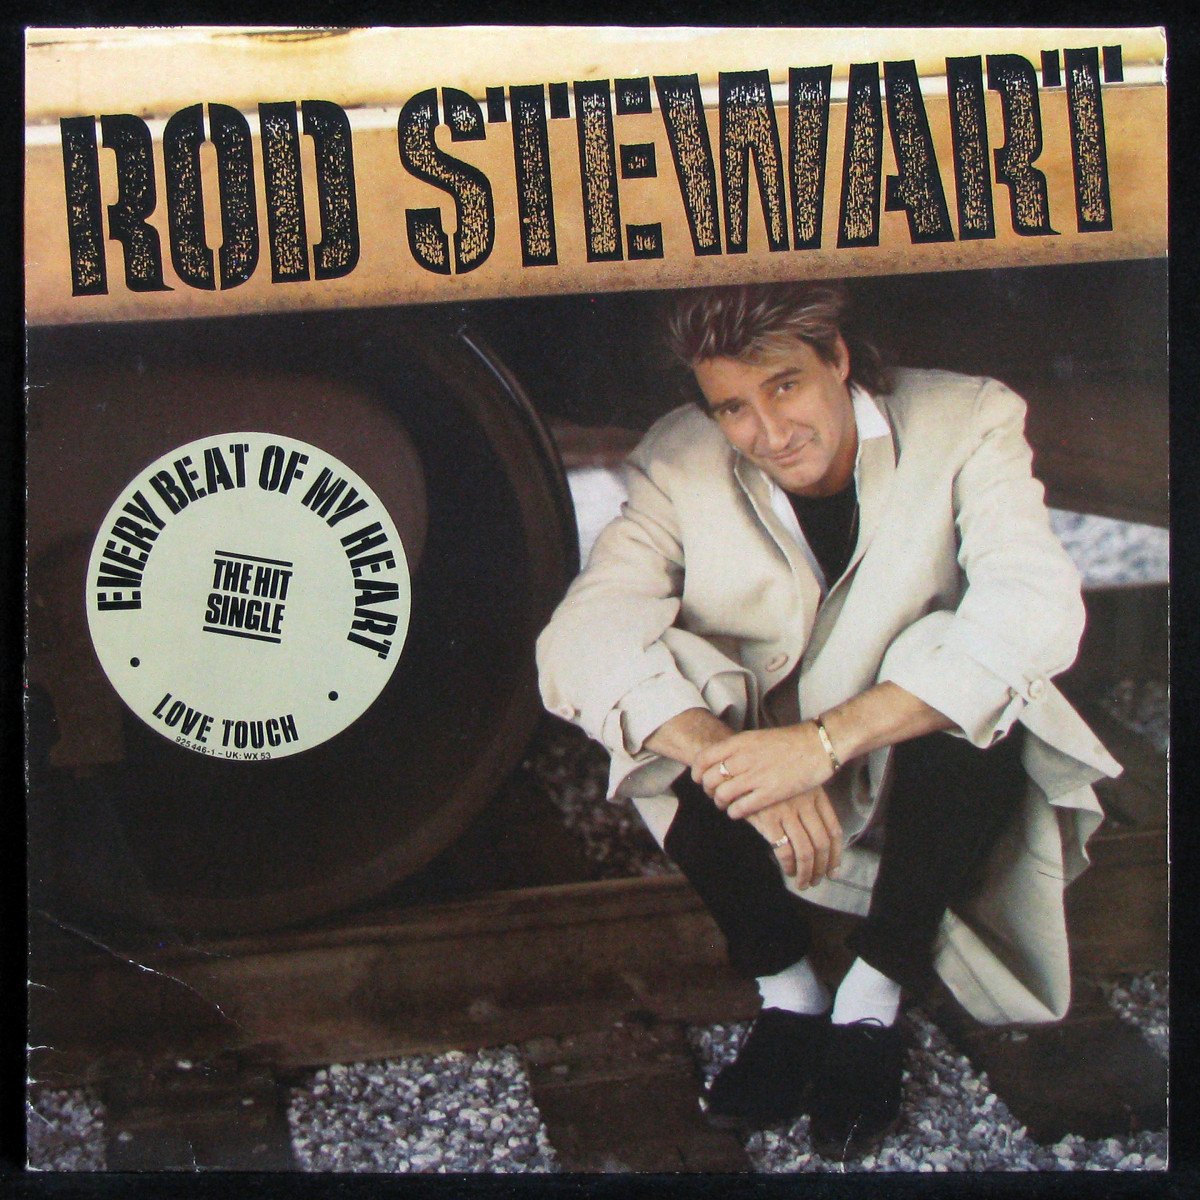 LP Rod Stewart — Every Beat Of My Heart фото